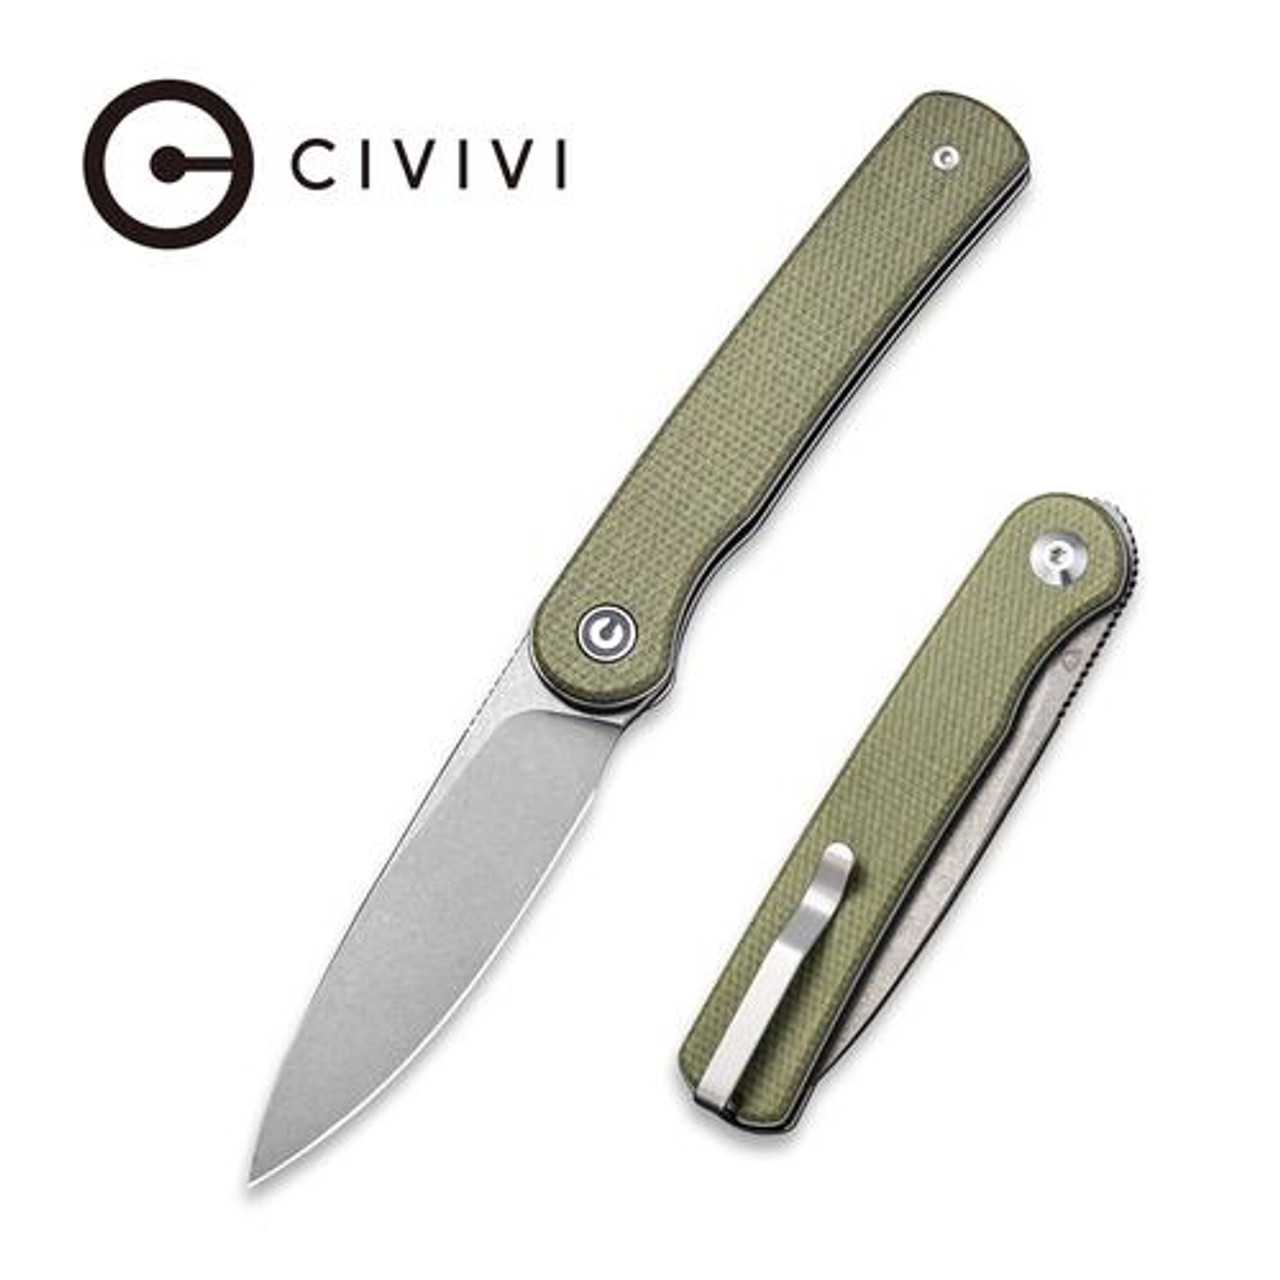 Ножи civivi купить. Нож Civivi Green. Нож слип Джойнт. Нож складной Civivi. Складной нож Slip Joint.